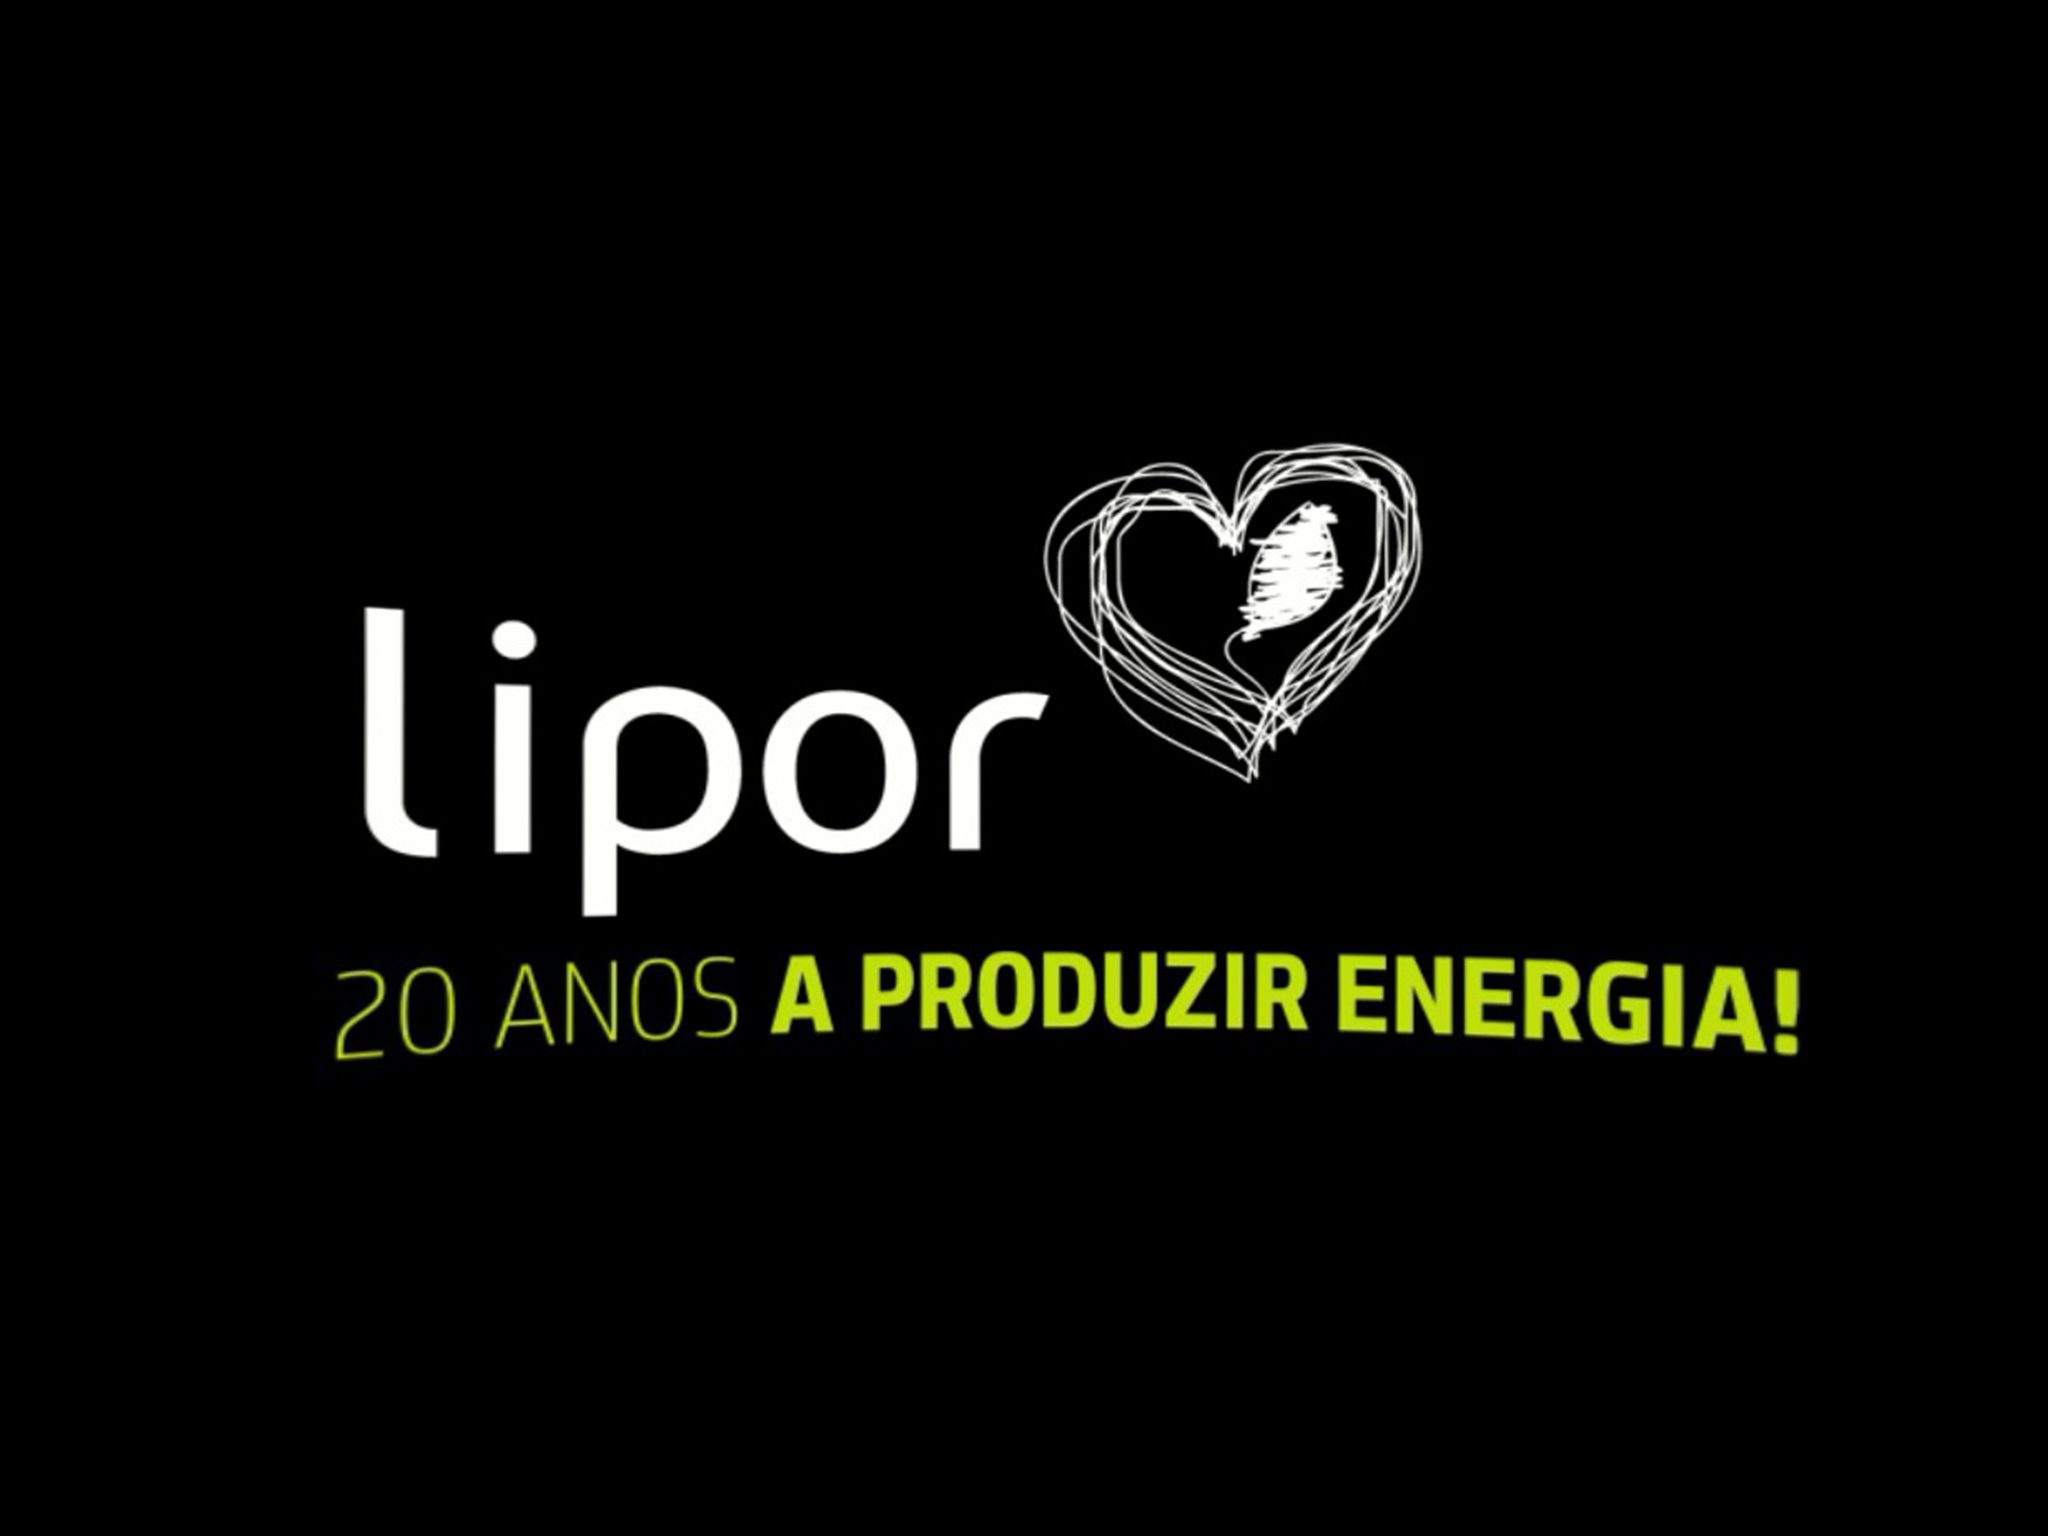 Logótipo Lipor - "20 Anos a Produzir Energia"